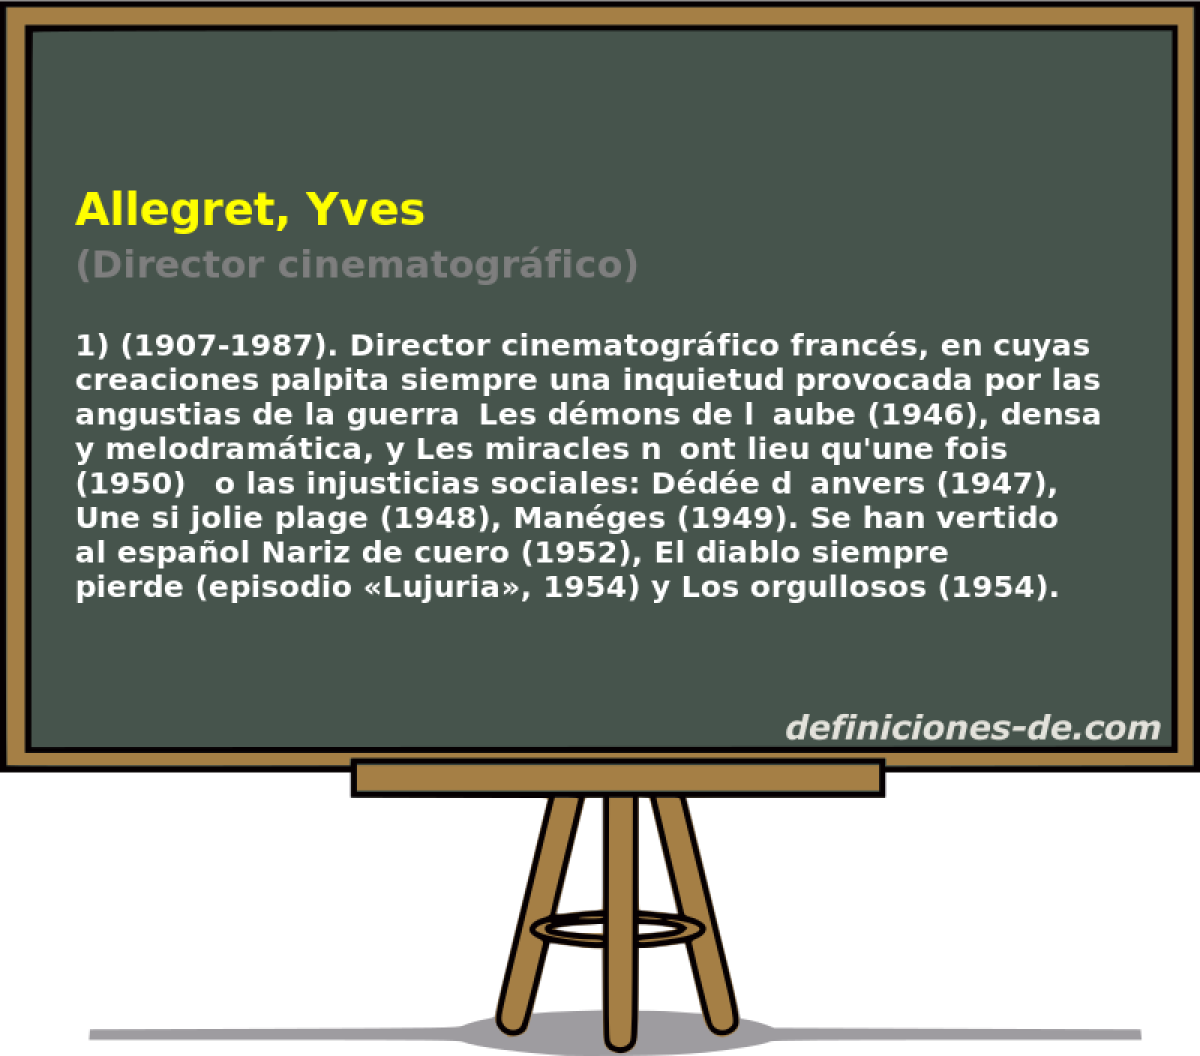 Allegret, Yves (Director cinematogrfico)